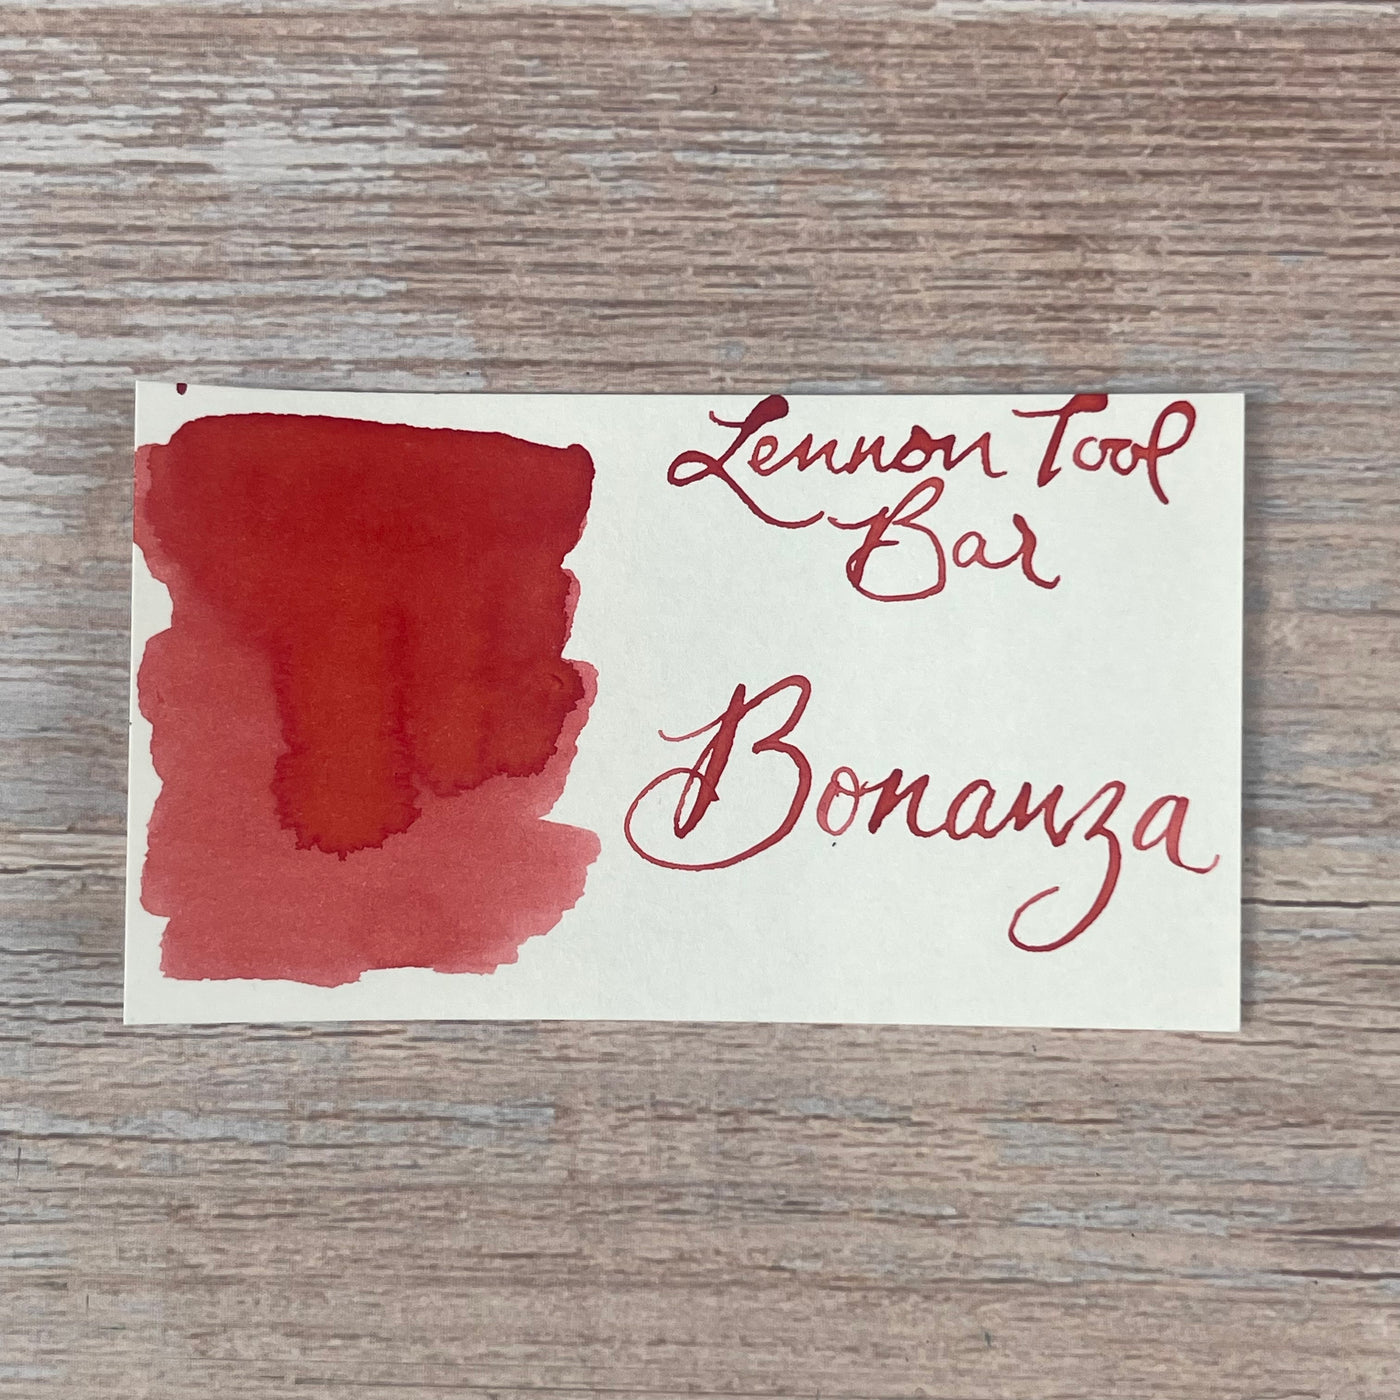 Lennon Tool Bar Bonanza - 30ml Bottled Ink